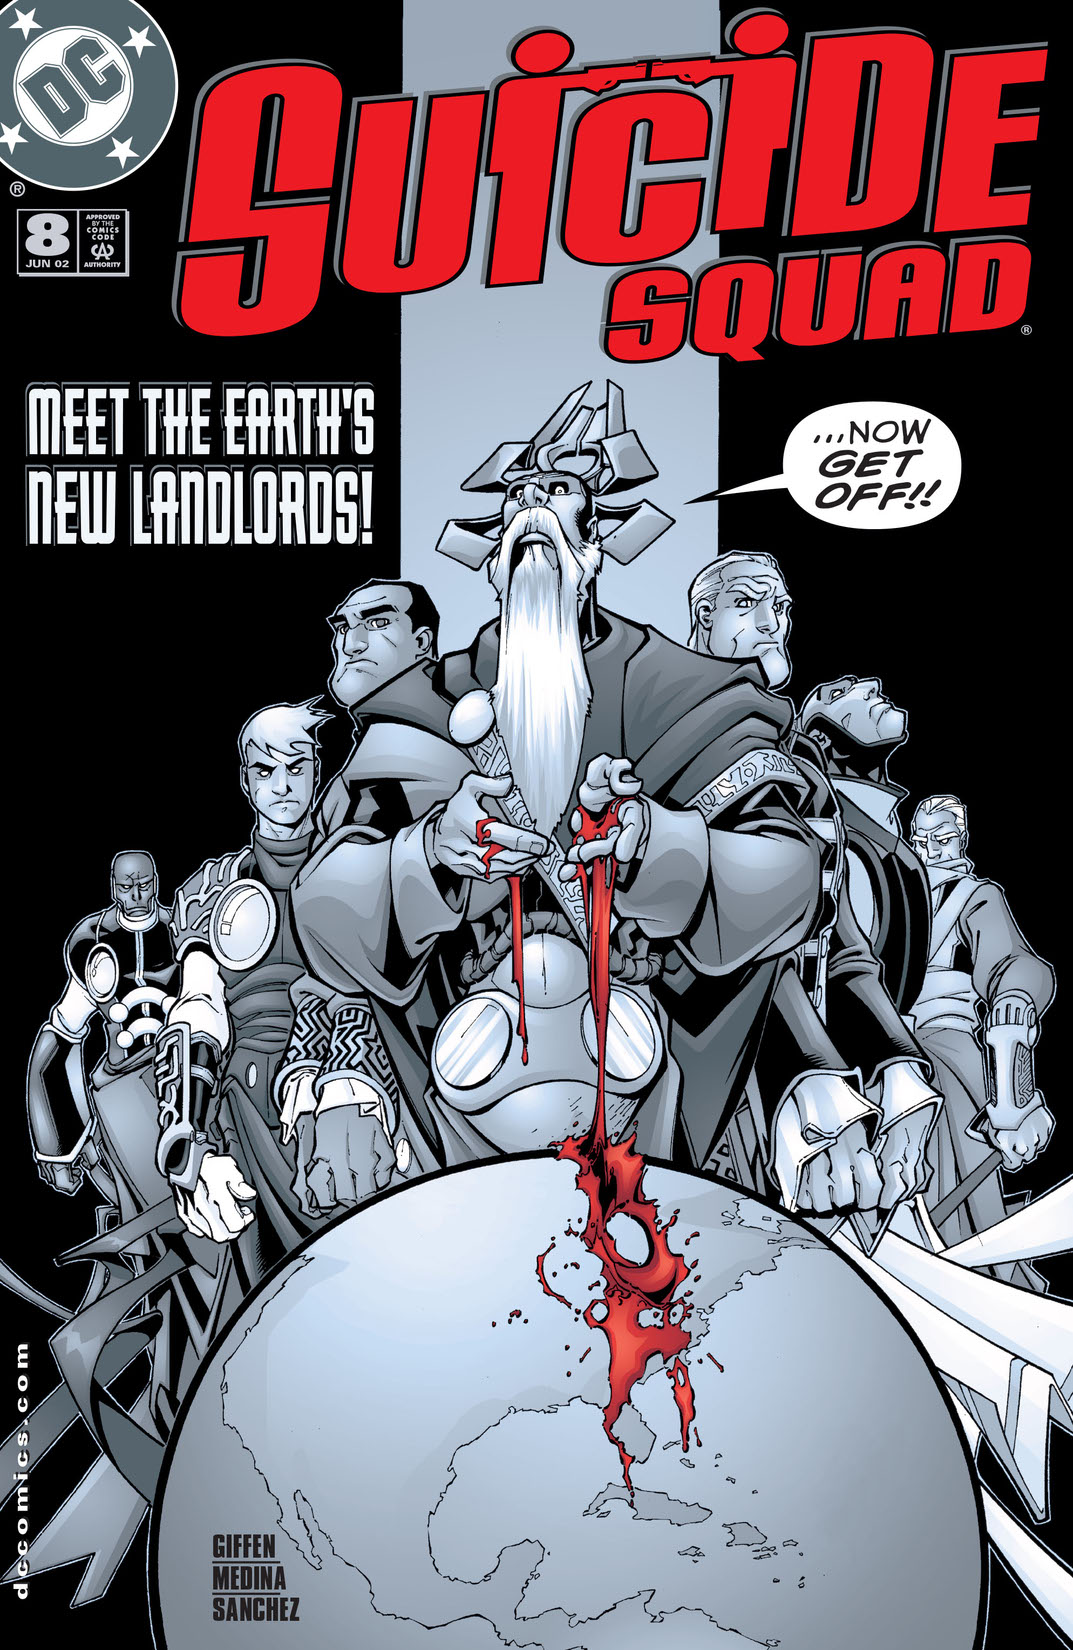 Suicide Squad (2001-) #8 preview images